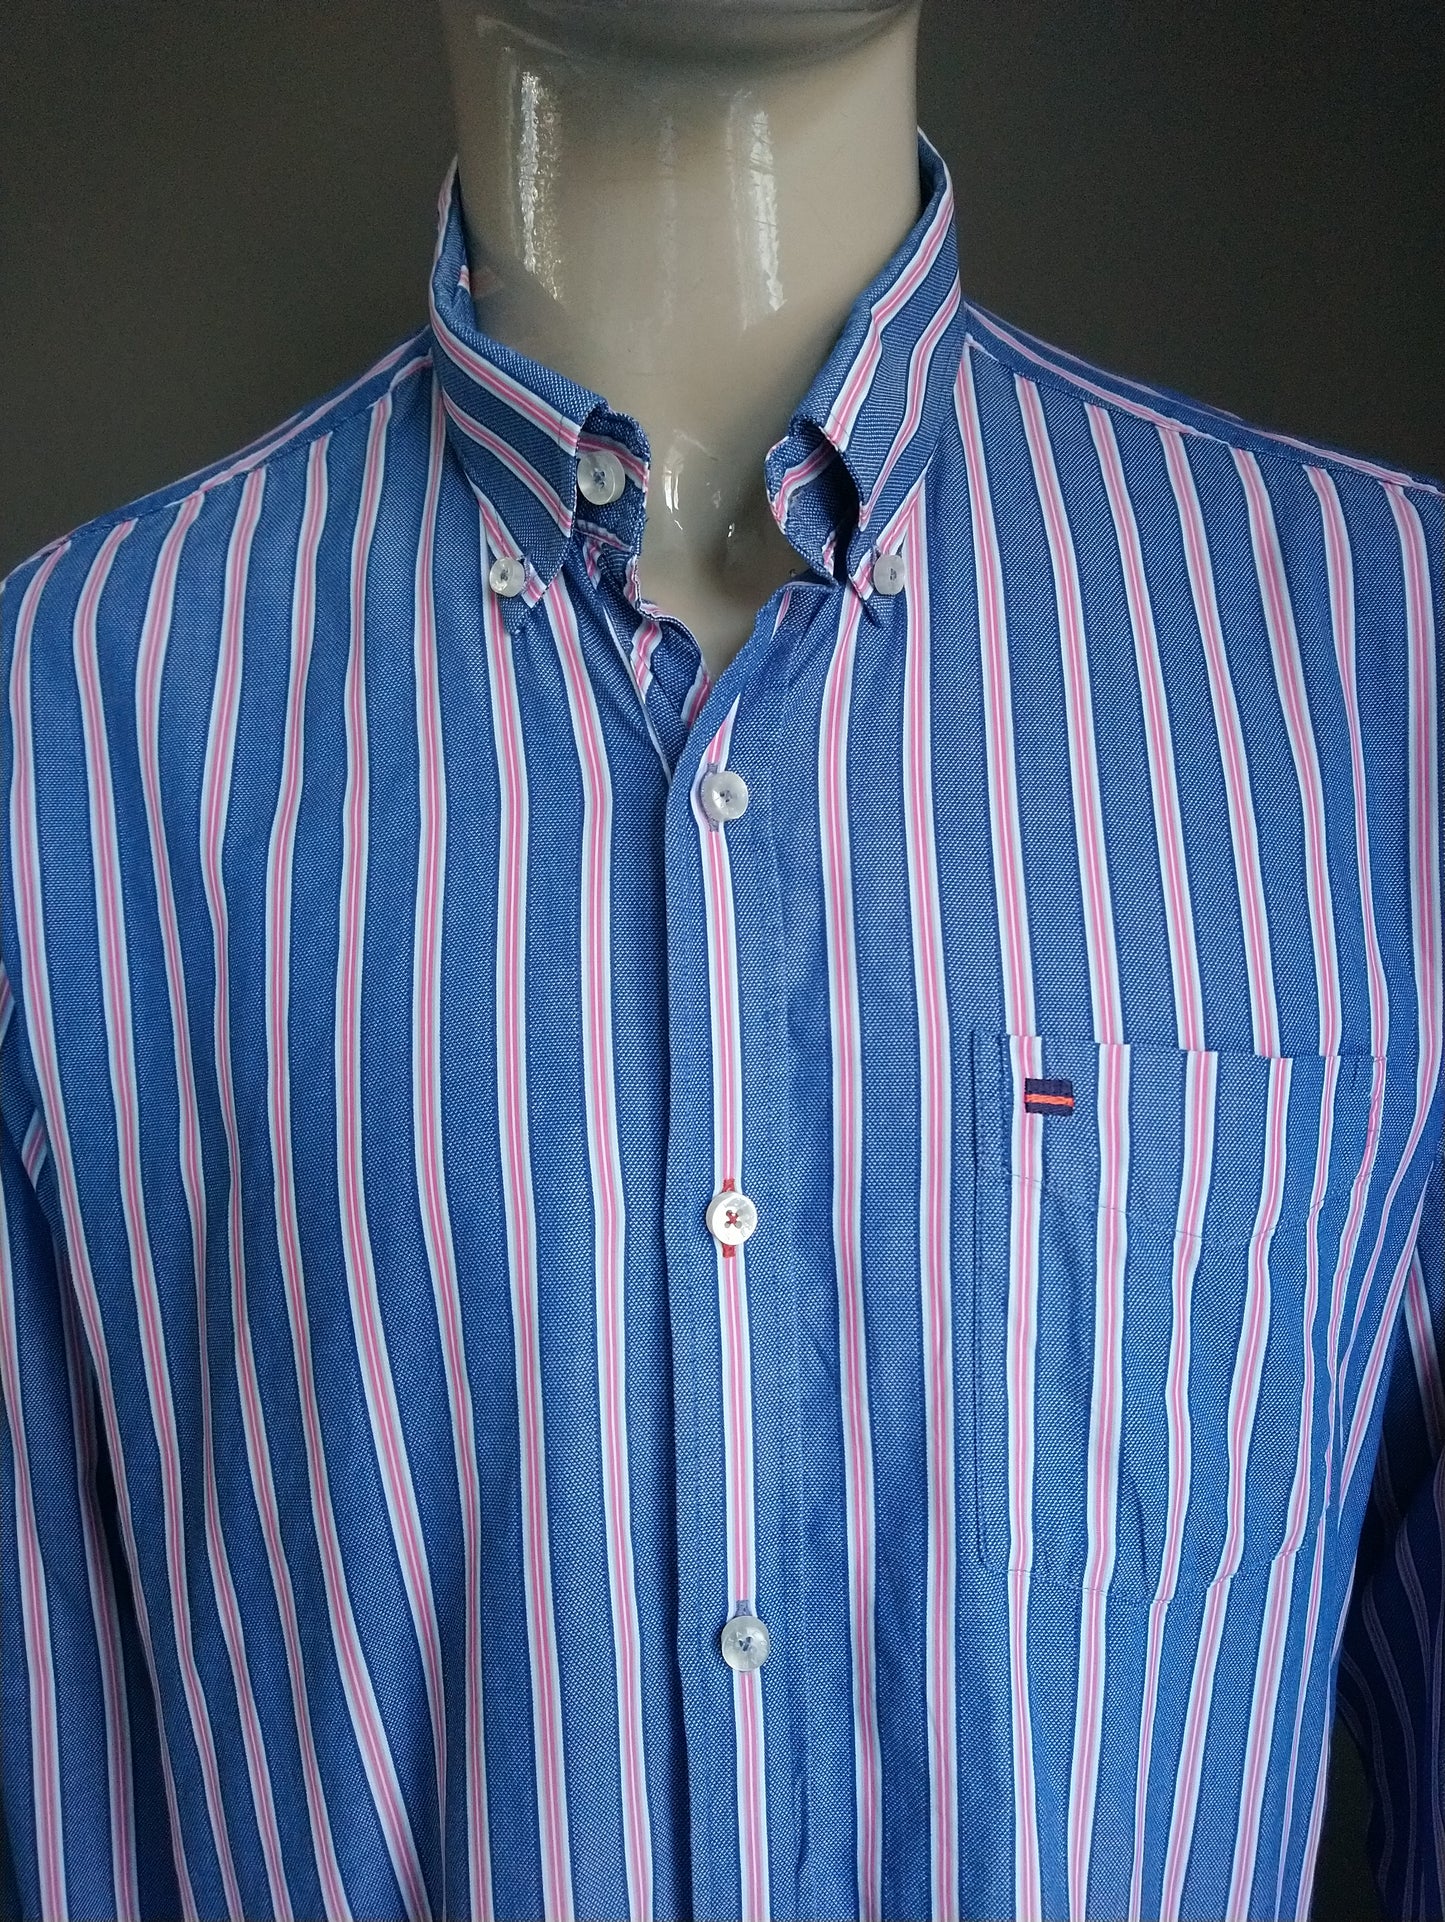 Shirt all'avanguardia. Strisce bianche rosa blu. Taglia XL. Adattamento regolare.